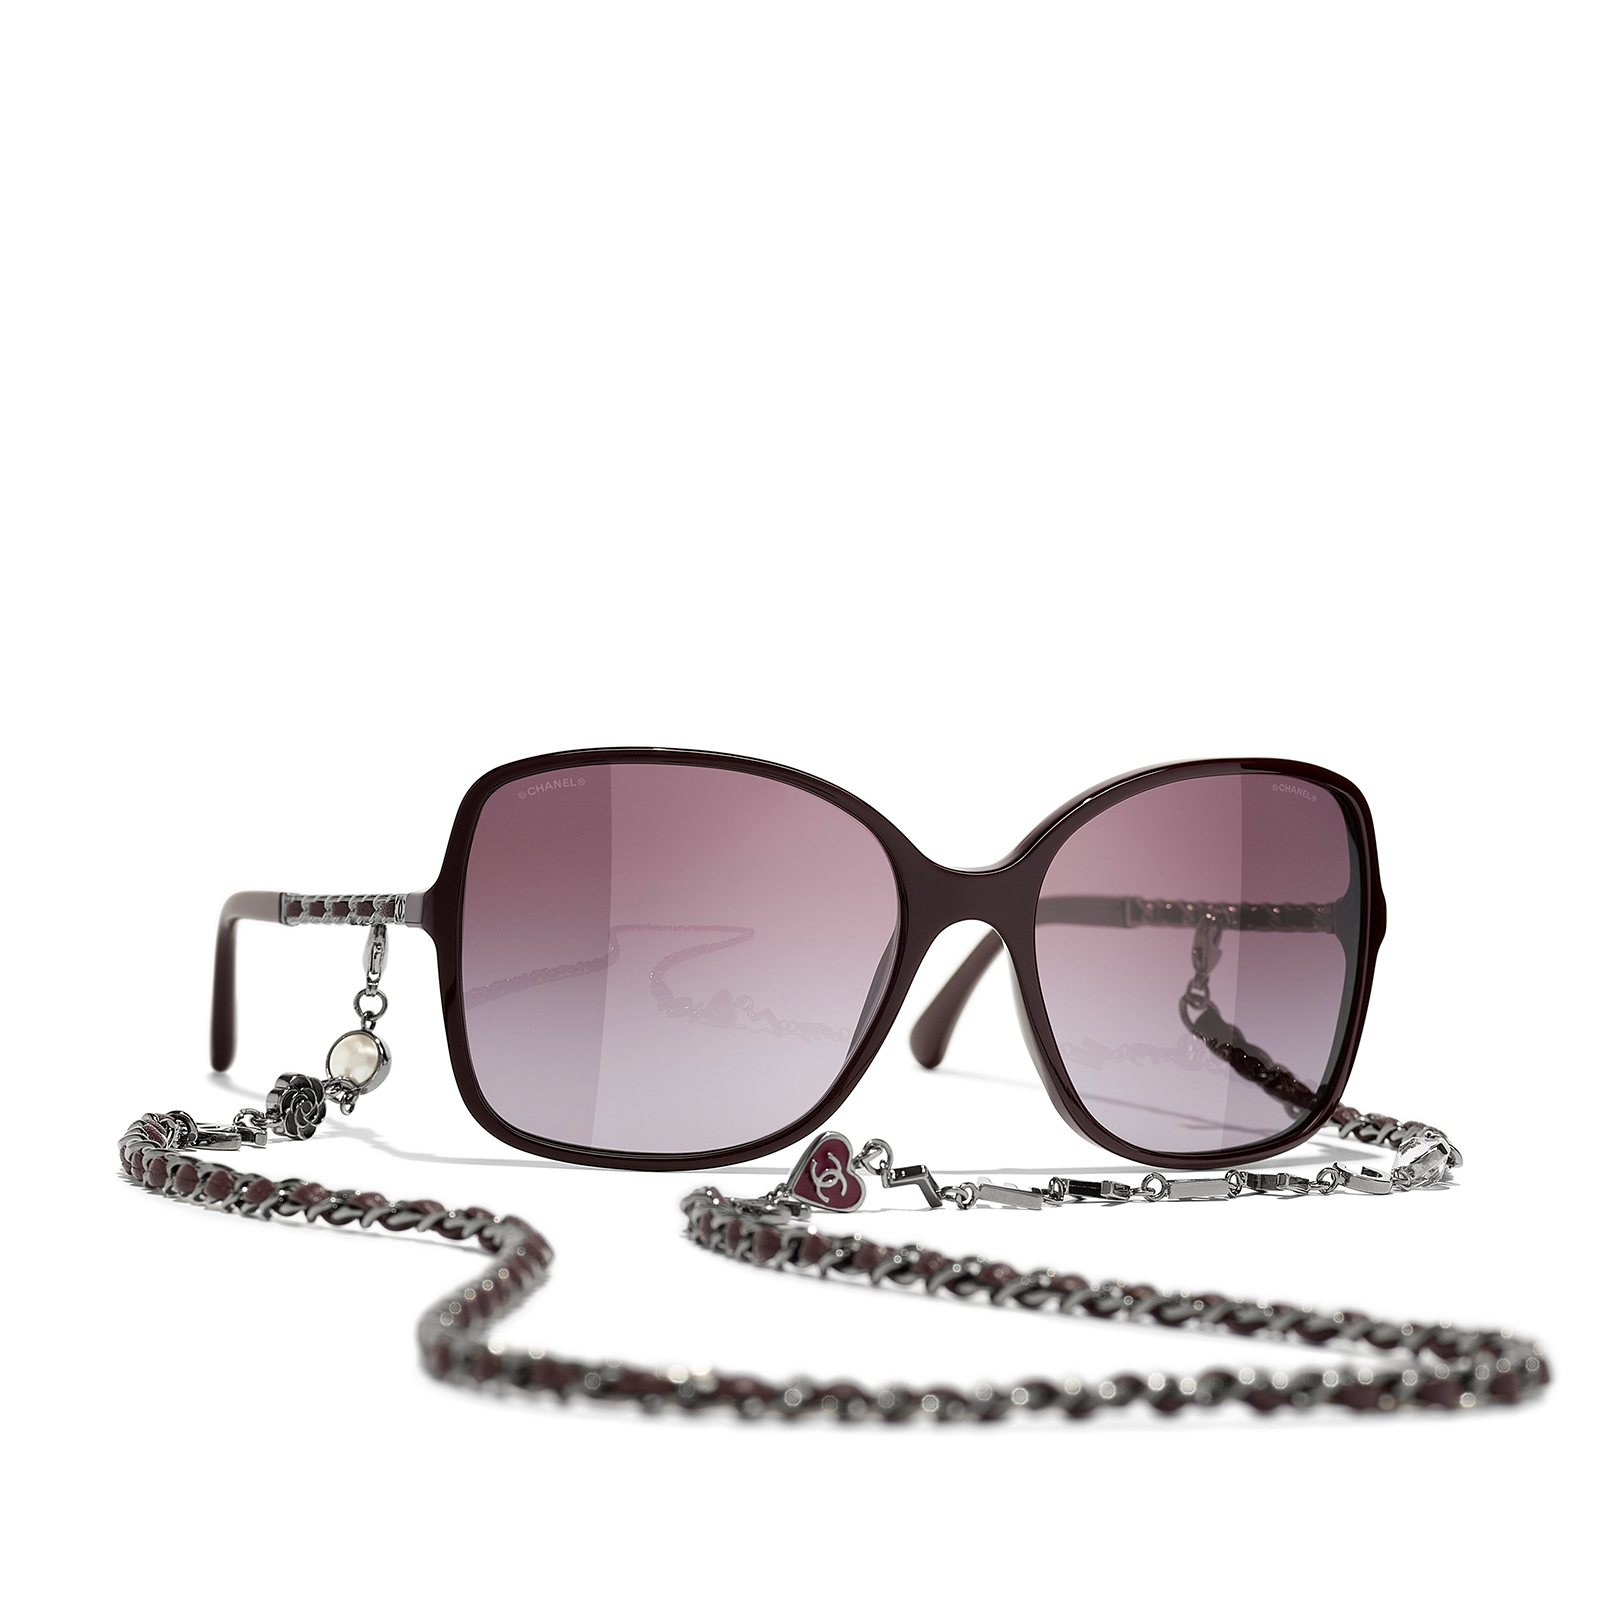 CHANEL square Sunglasses 1461S1 Burgundy & Dark Silver - three-quarters view